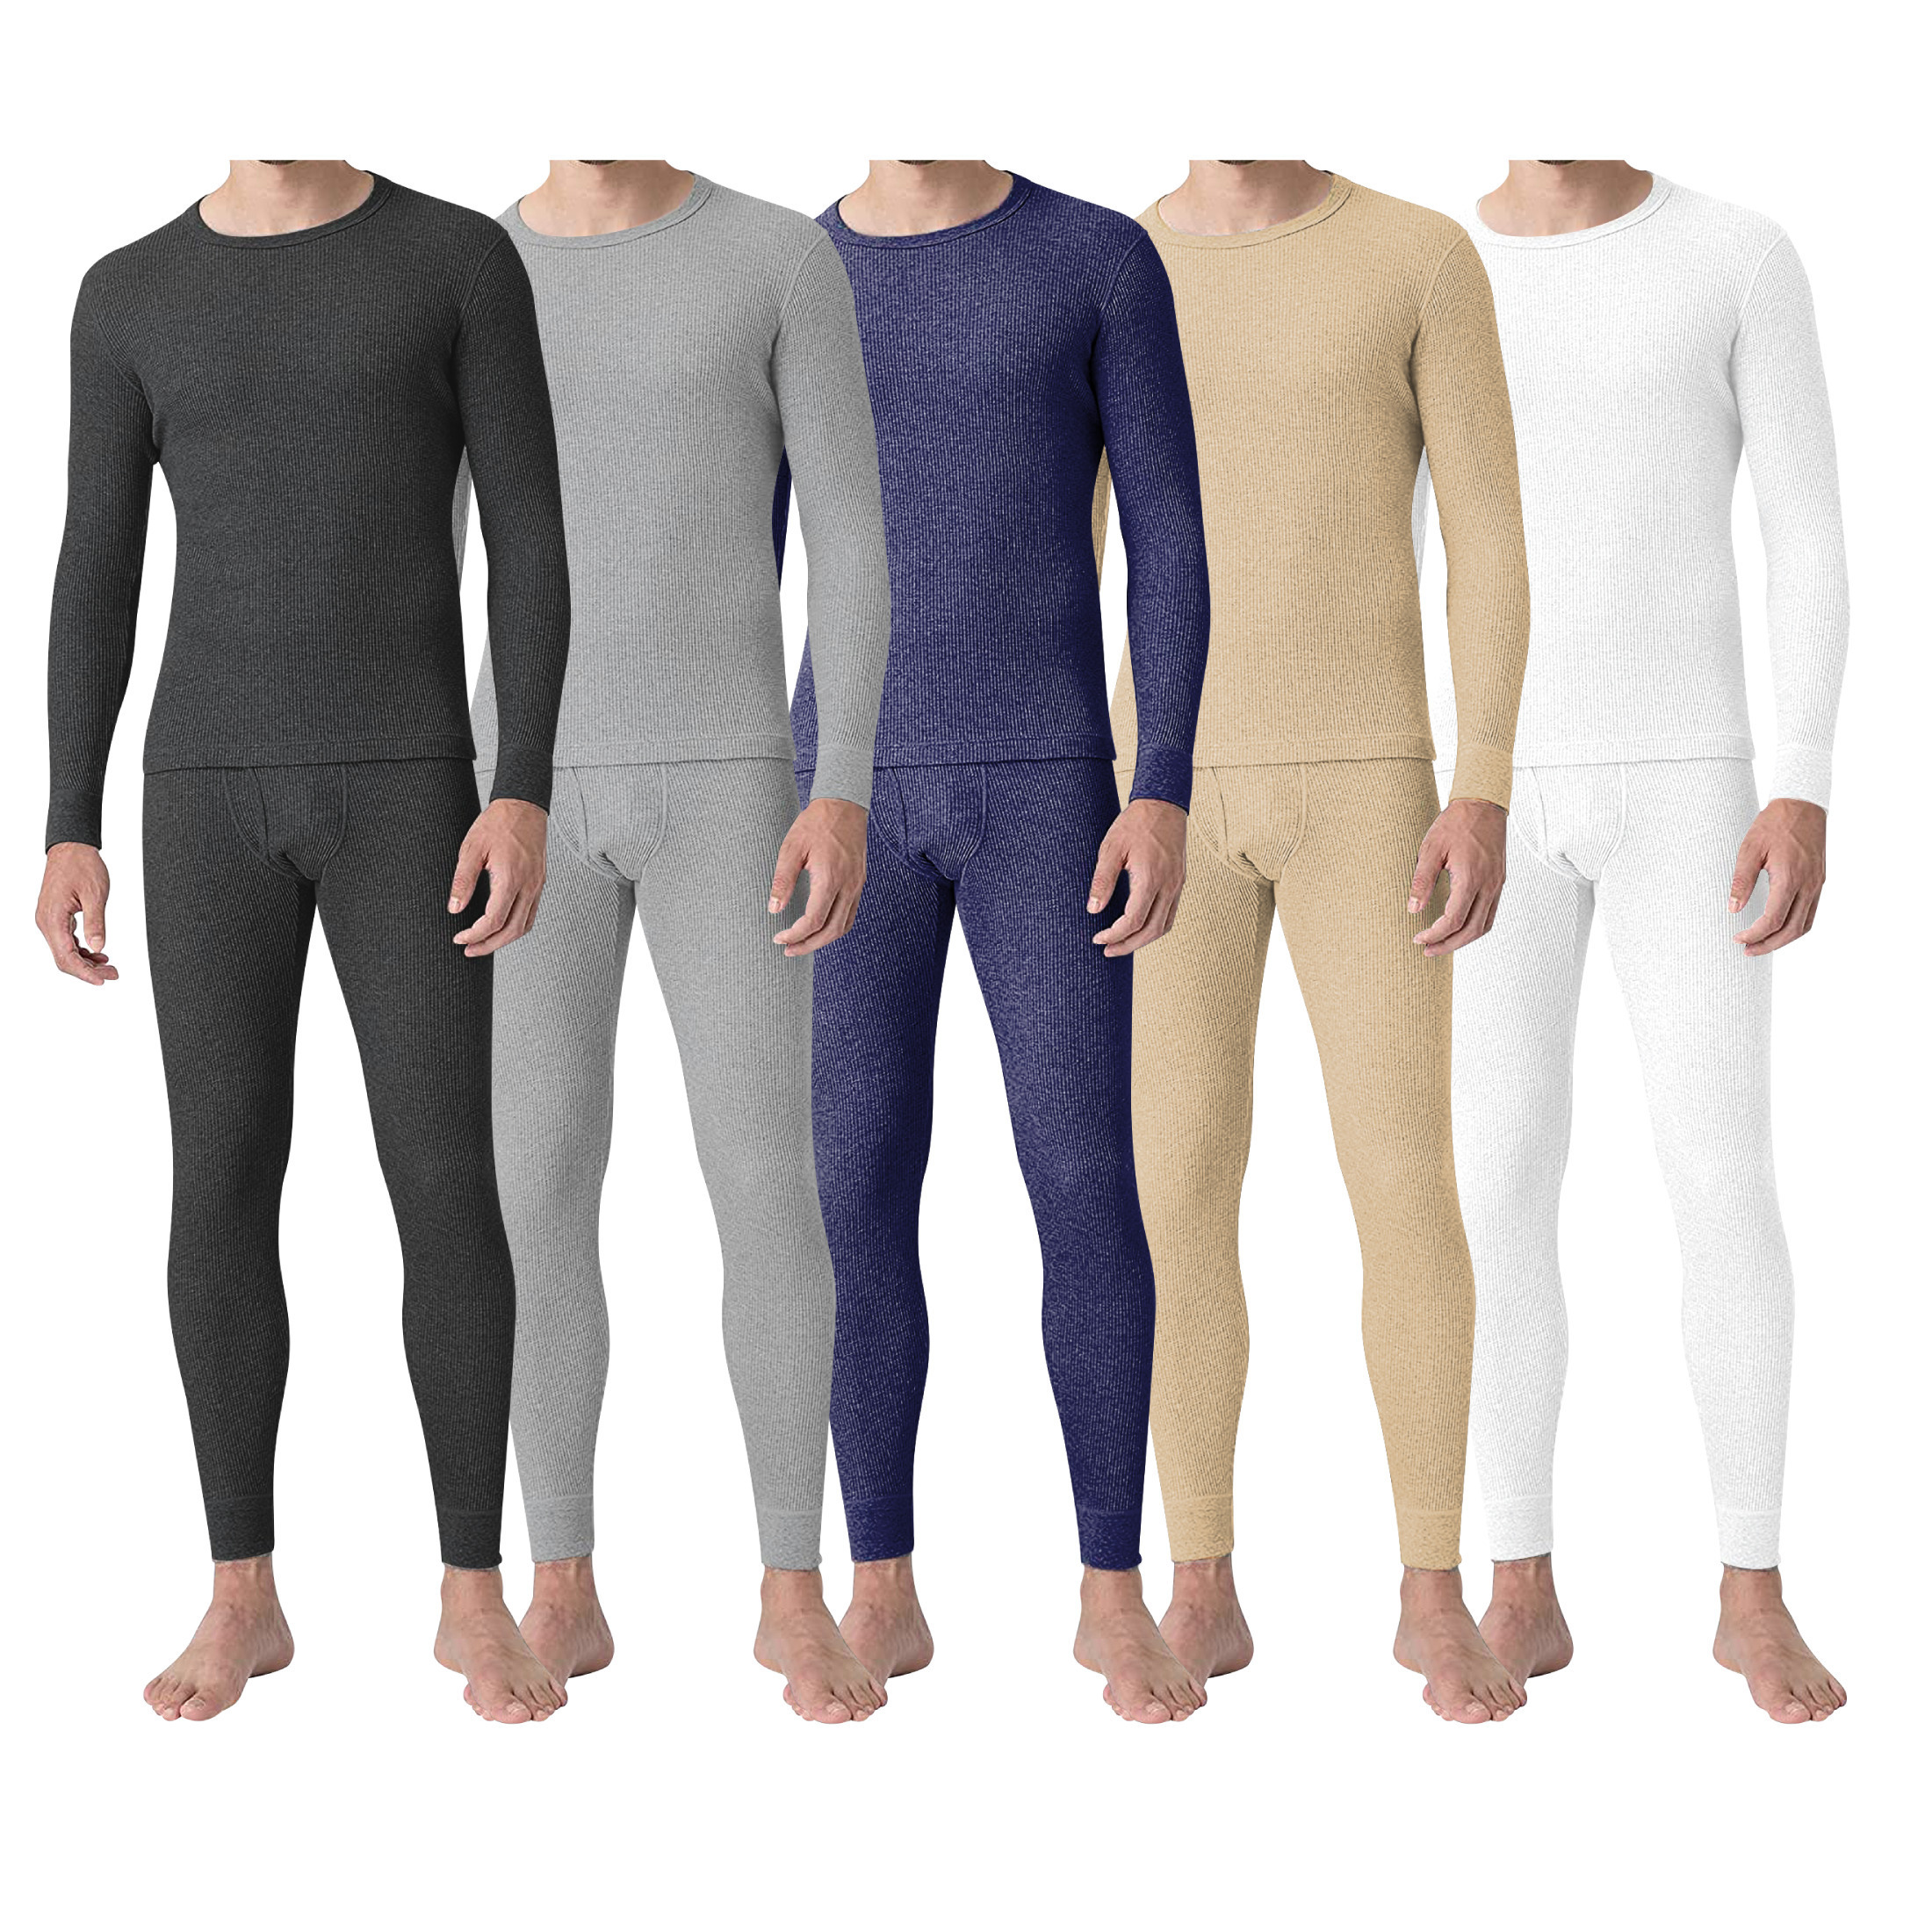 2-Piece: Men's Super Soft Cotton Waffle Knit Winter Thermal Underwear Set - Charcoal, X-Large